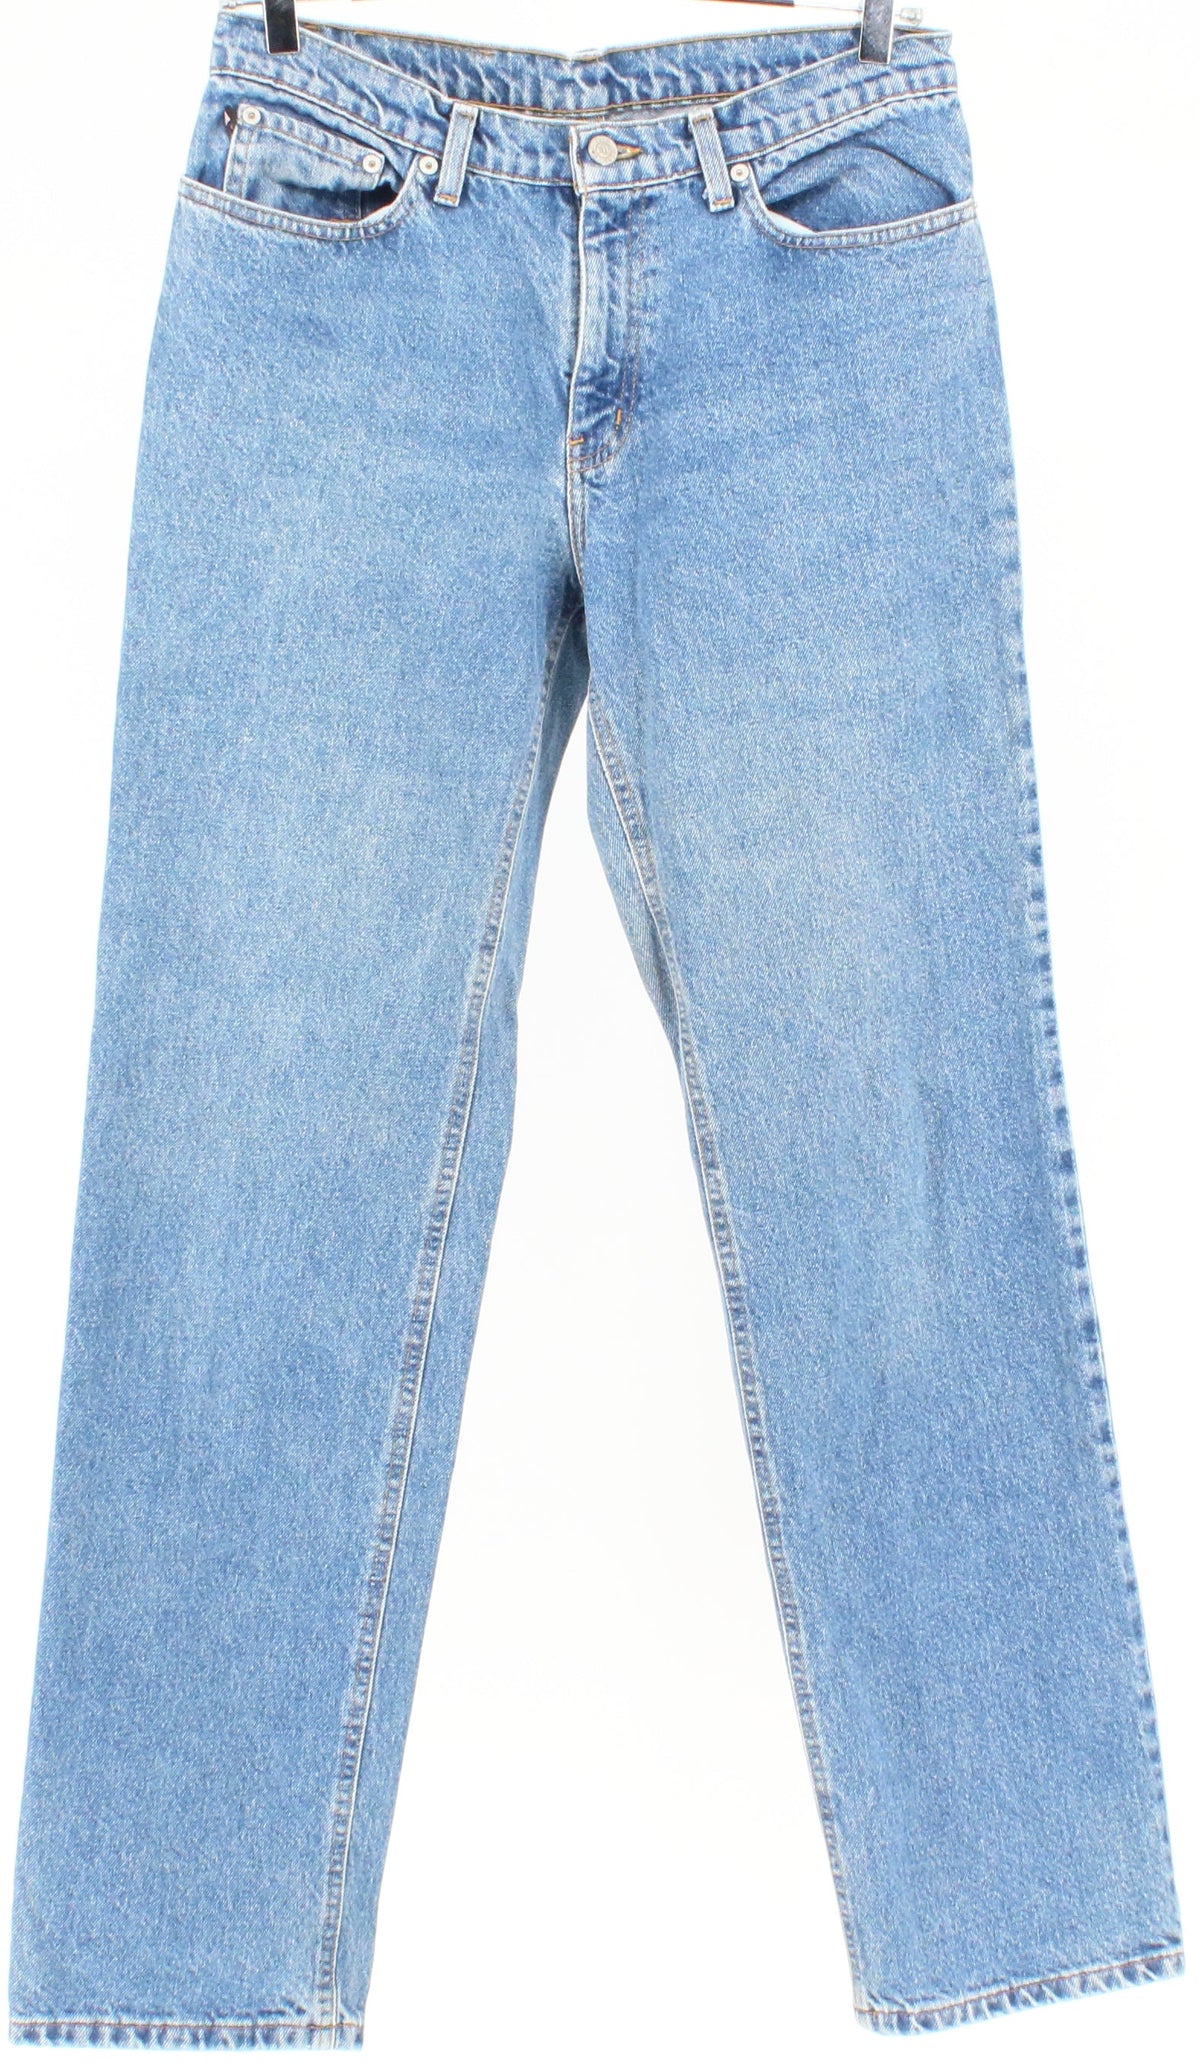 Polo Jean Company Ralph Lauren Blue Denim Pants